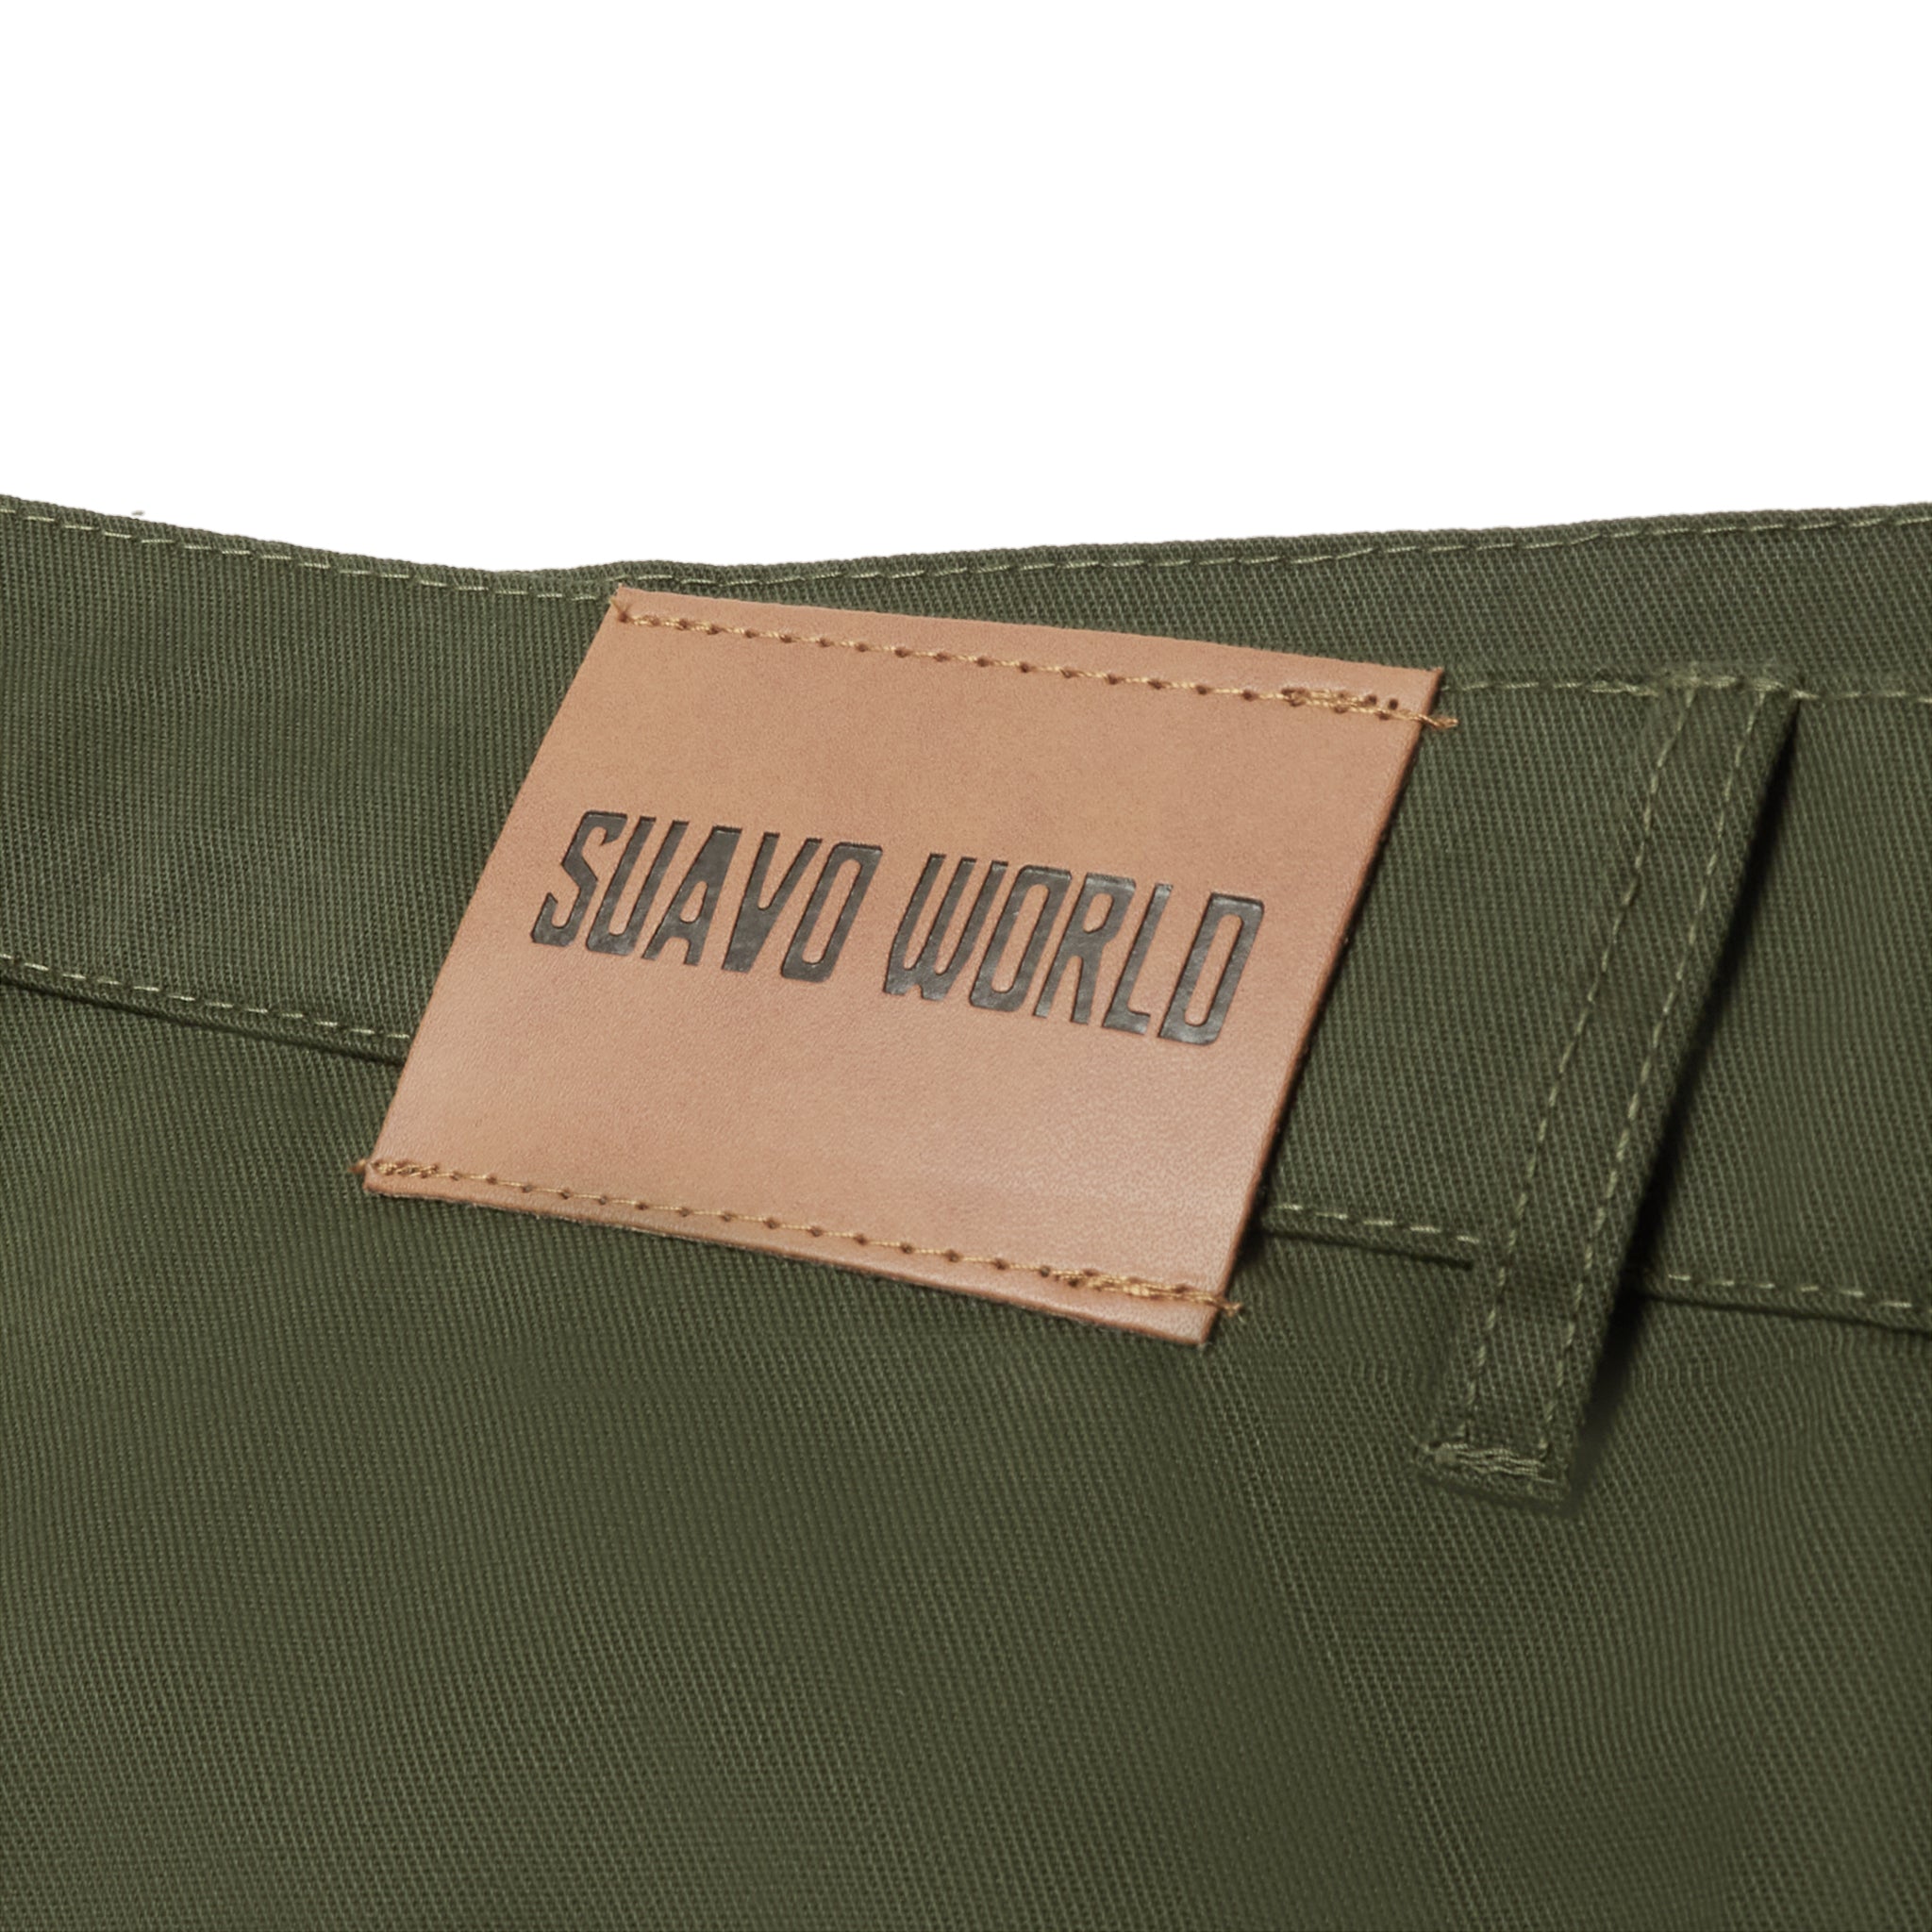 Back tab view of Suavo World Cargo Flare Trousers Khaki